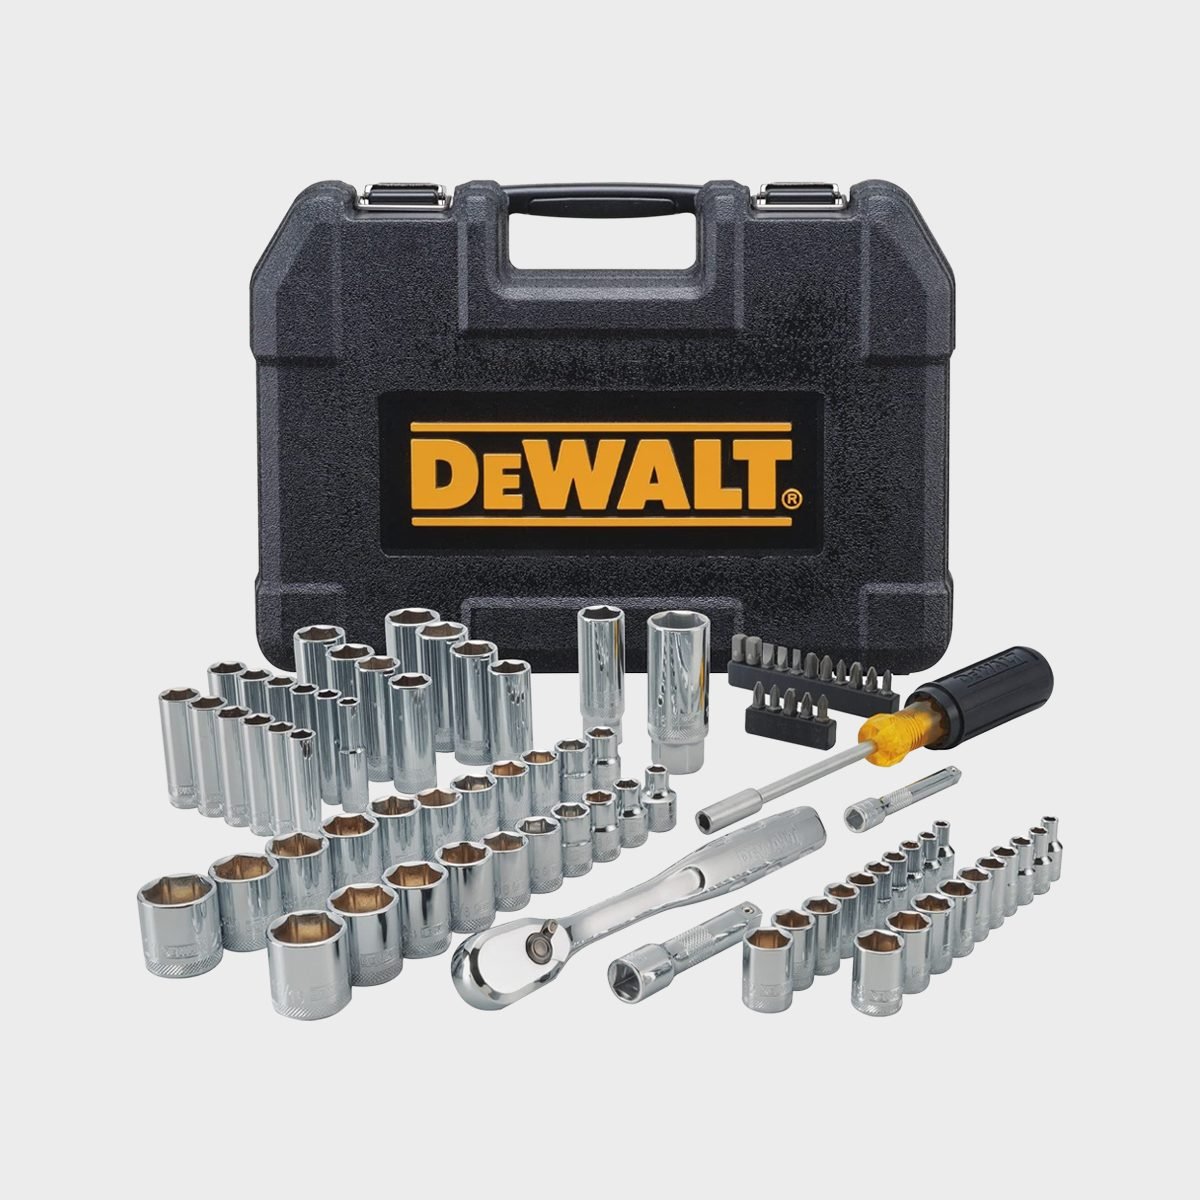 Dewalt Mechanics Tool Set Ecomm Amazon.com